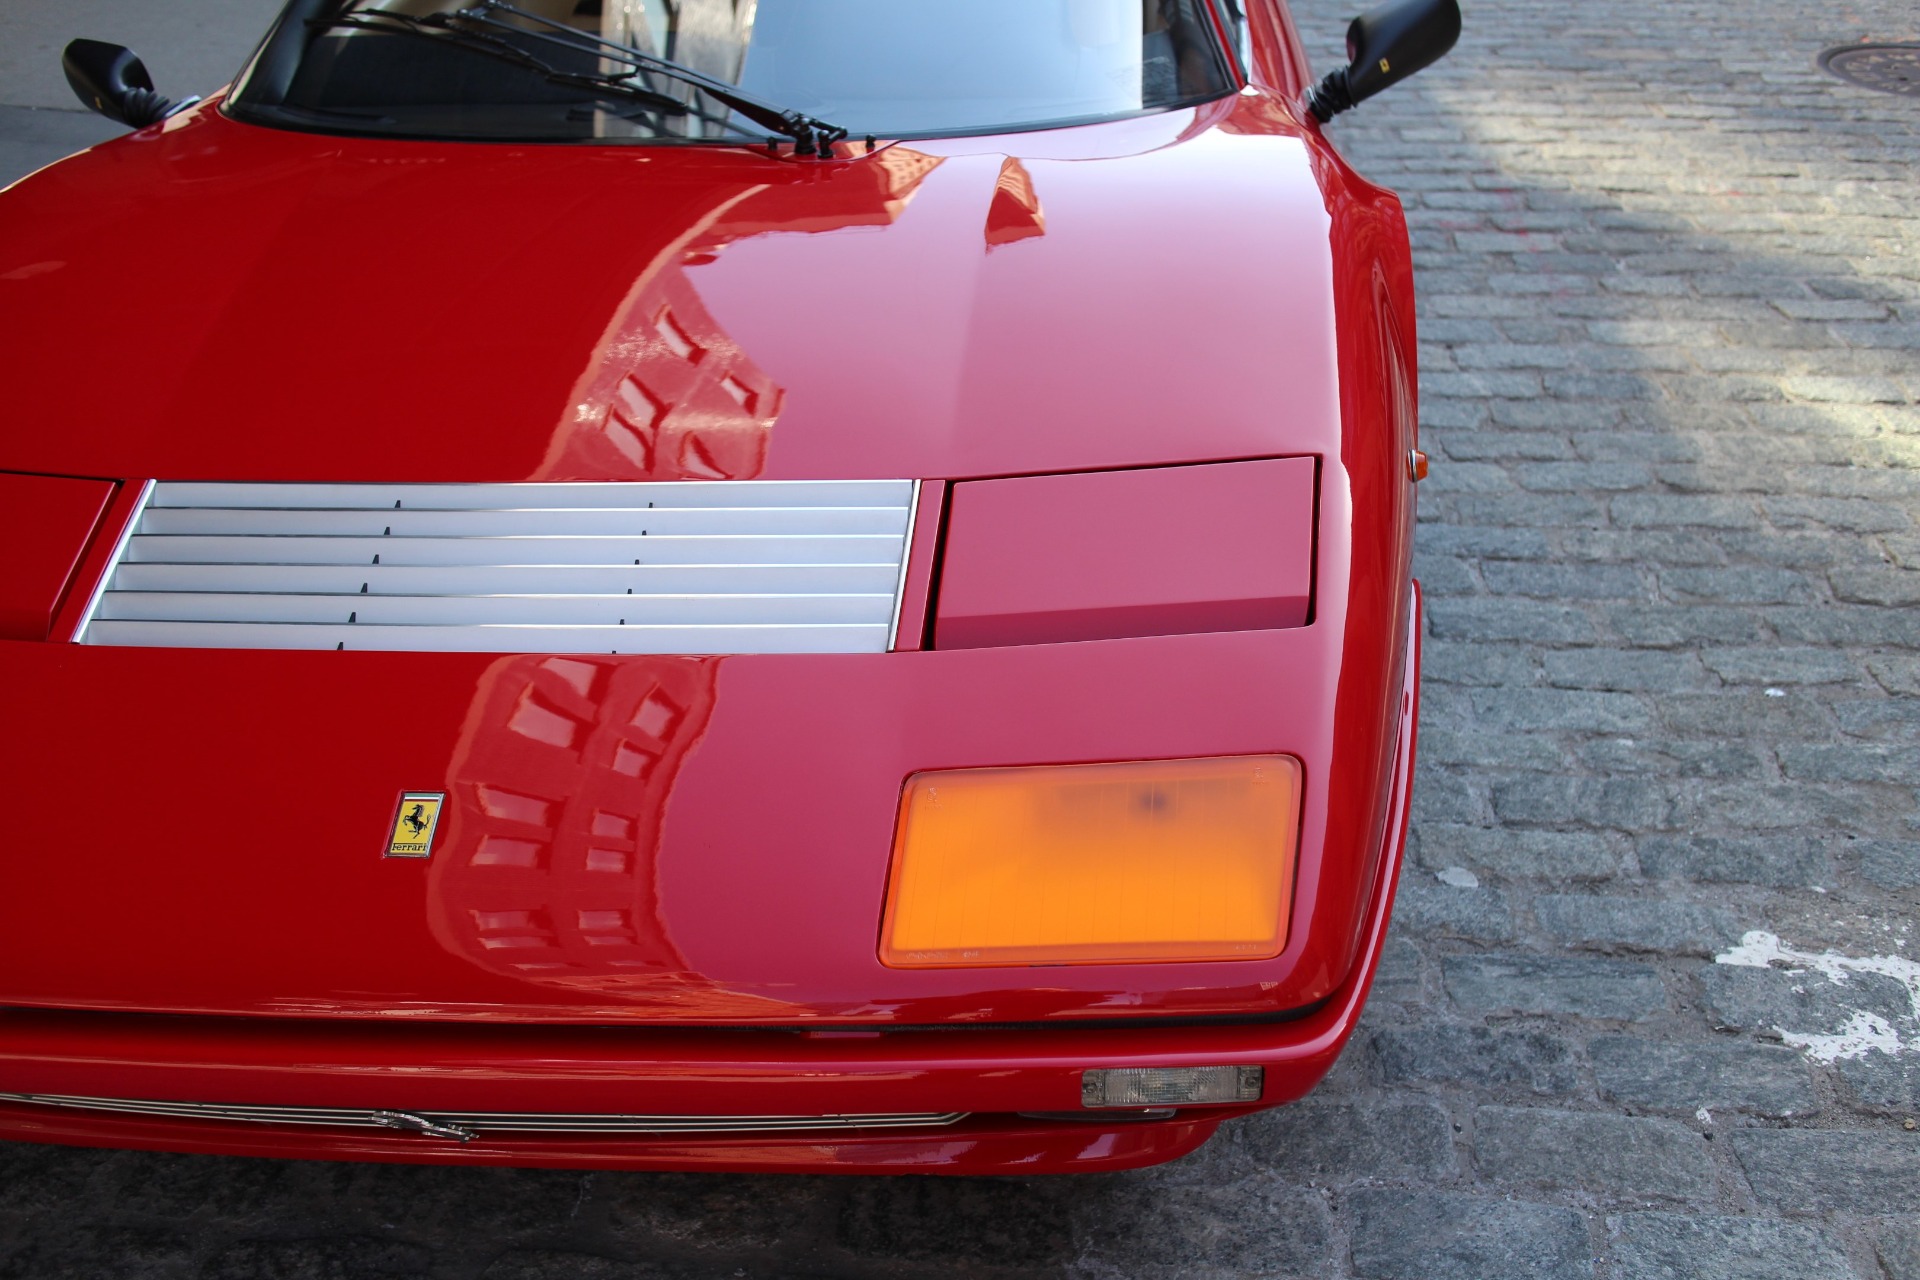 1984 Ferrari 512 BBi Stock # 1984512BBI for sale near New York, NY | NY Ferrari Dealer